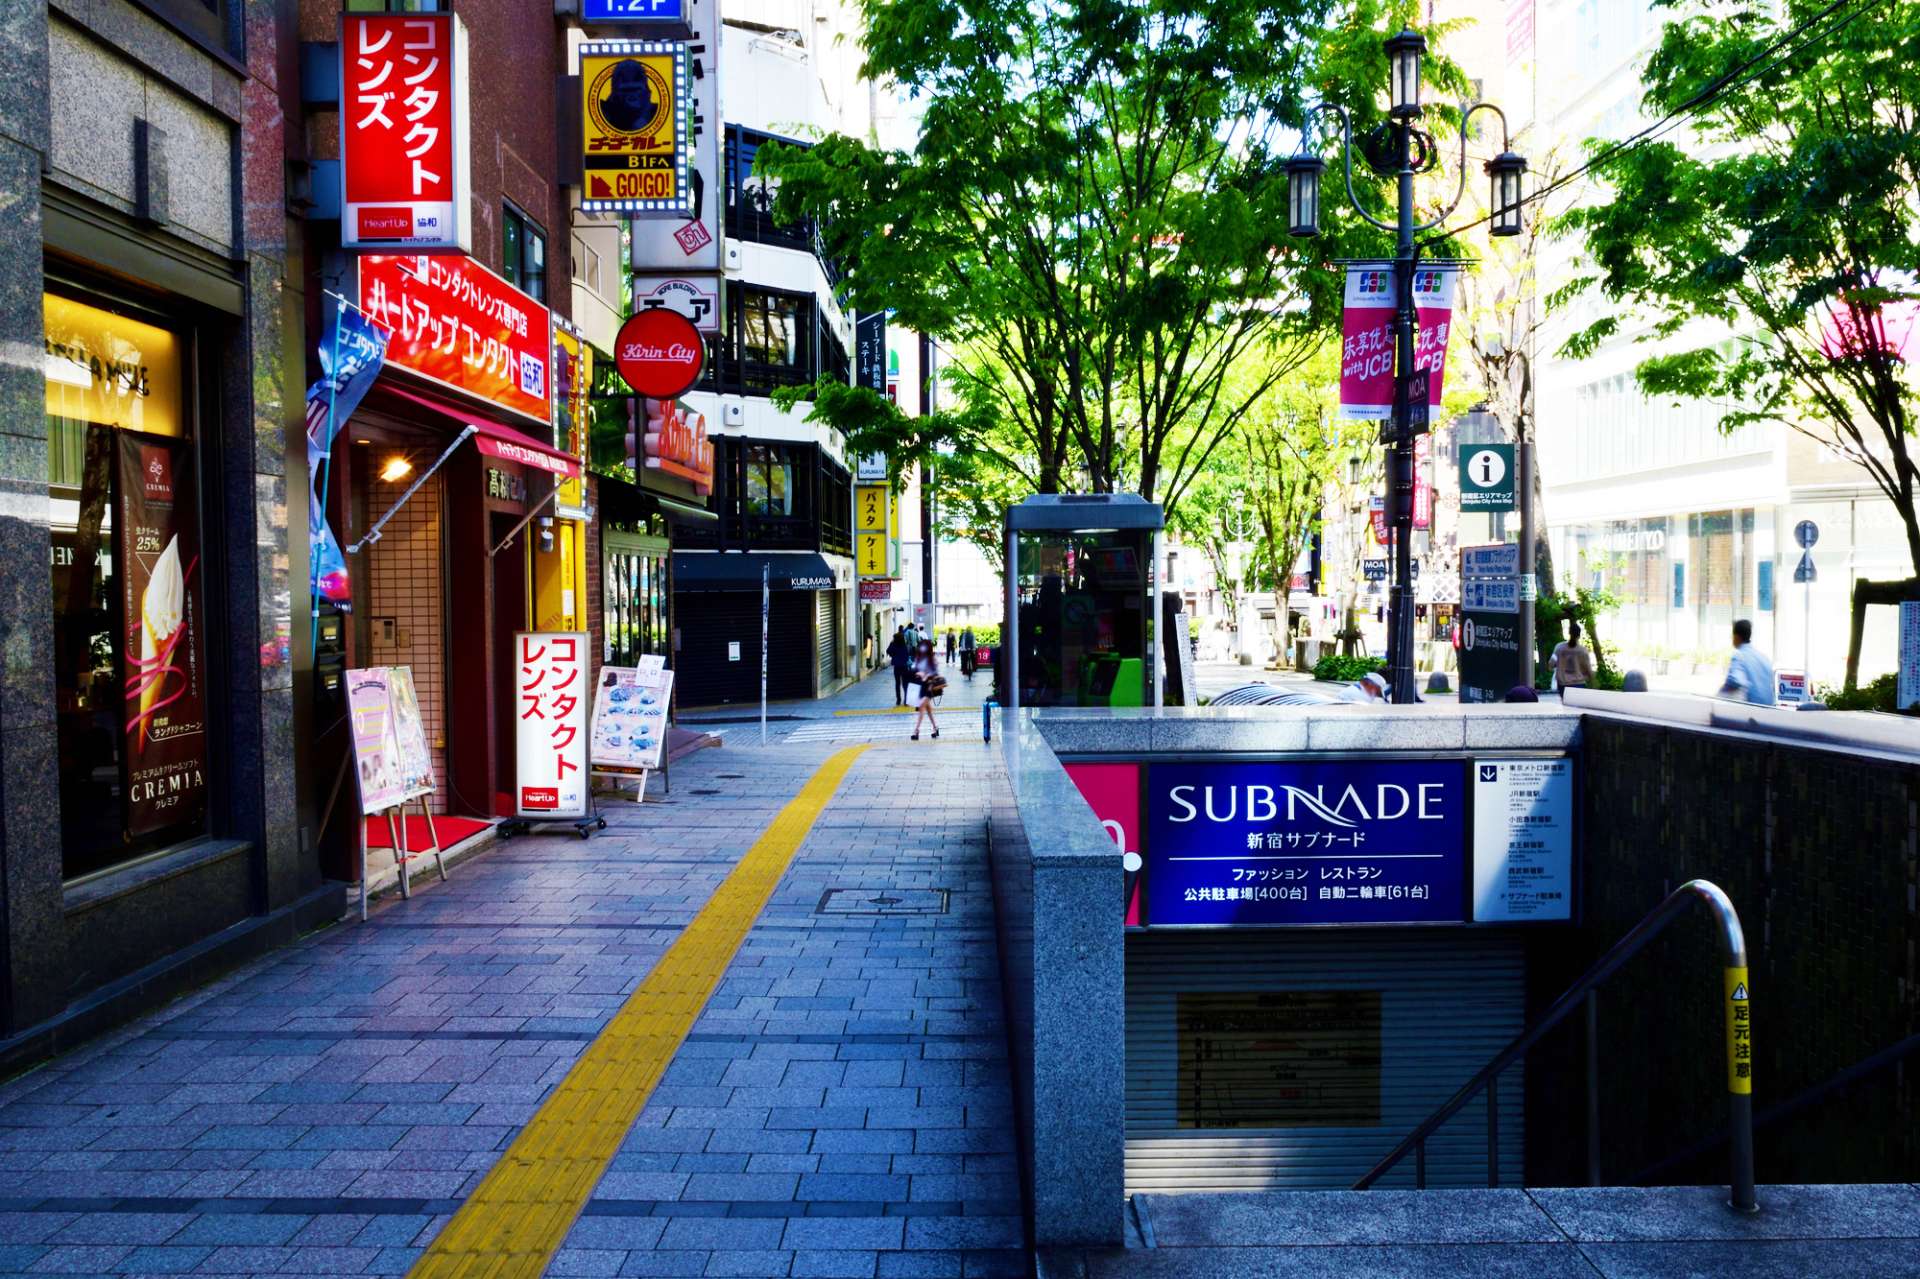 Shinjuku Subnade Where To Shop Access Hours Price Good Luck Trip